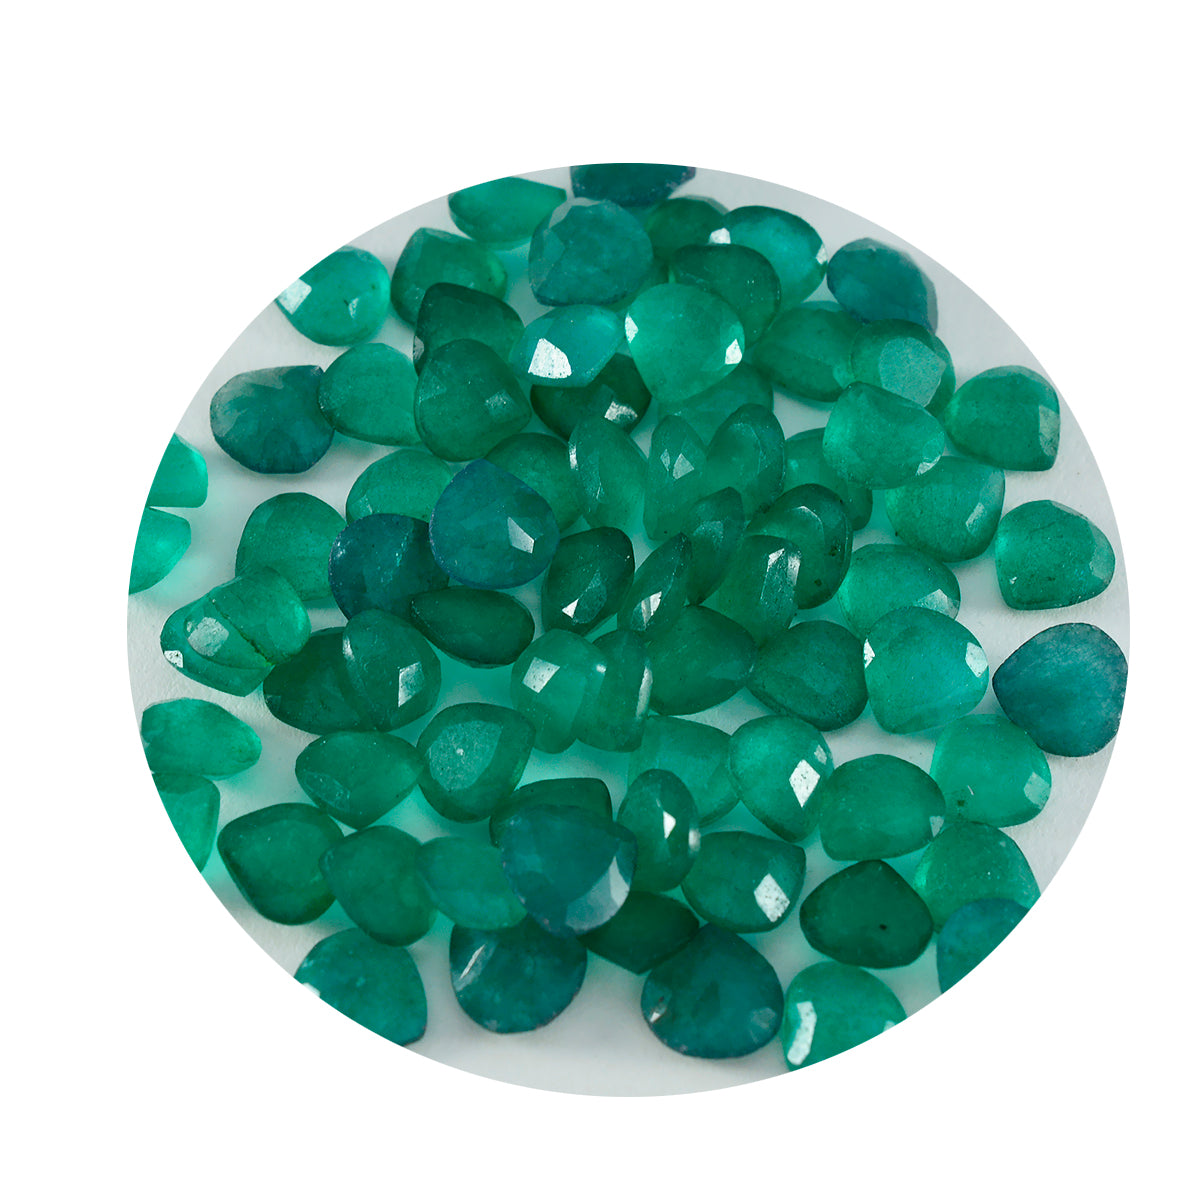 Riyogems 1PC echte groene jaspis gefacetteerd 7x7 mm hartvorm schattige kwaliteit losse edelsteen